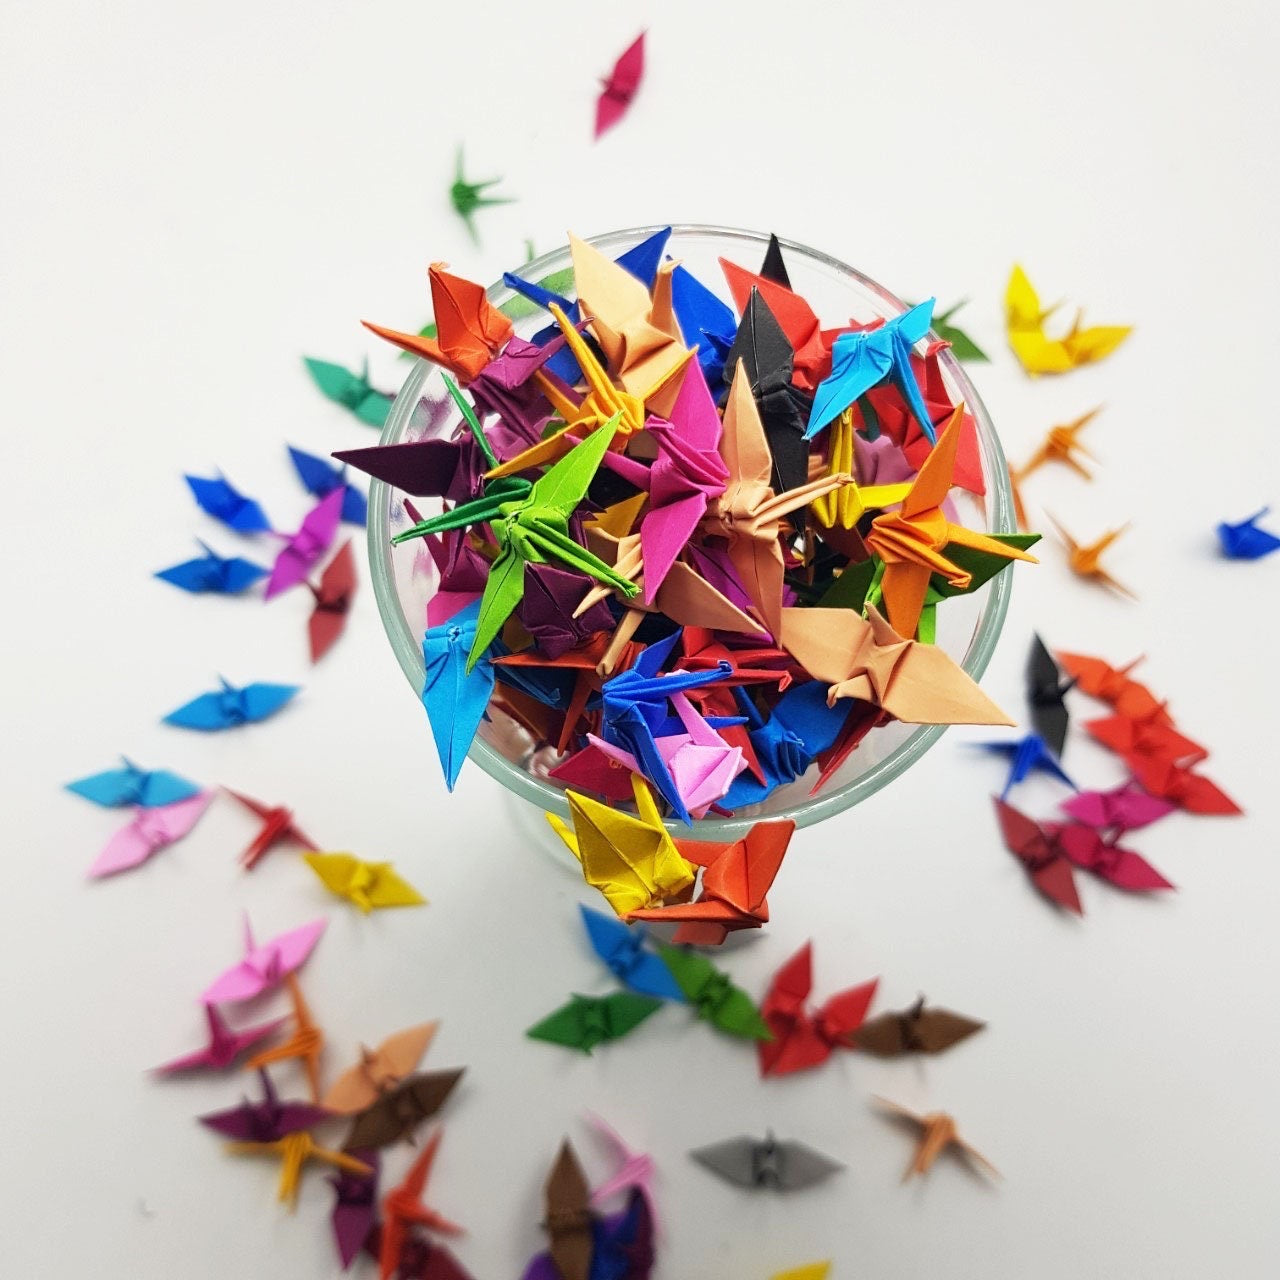 100 Rainbow Color Origami Paper Crane Origami Crane Made of 3.81cm (1.5 inches) for Wedding Decor